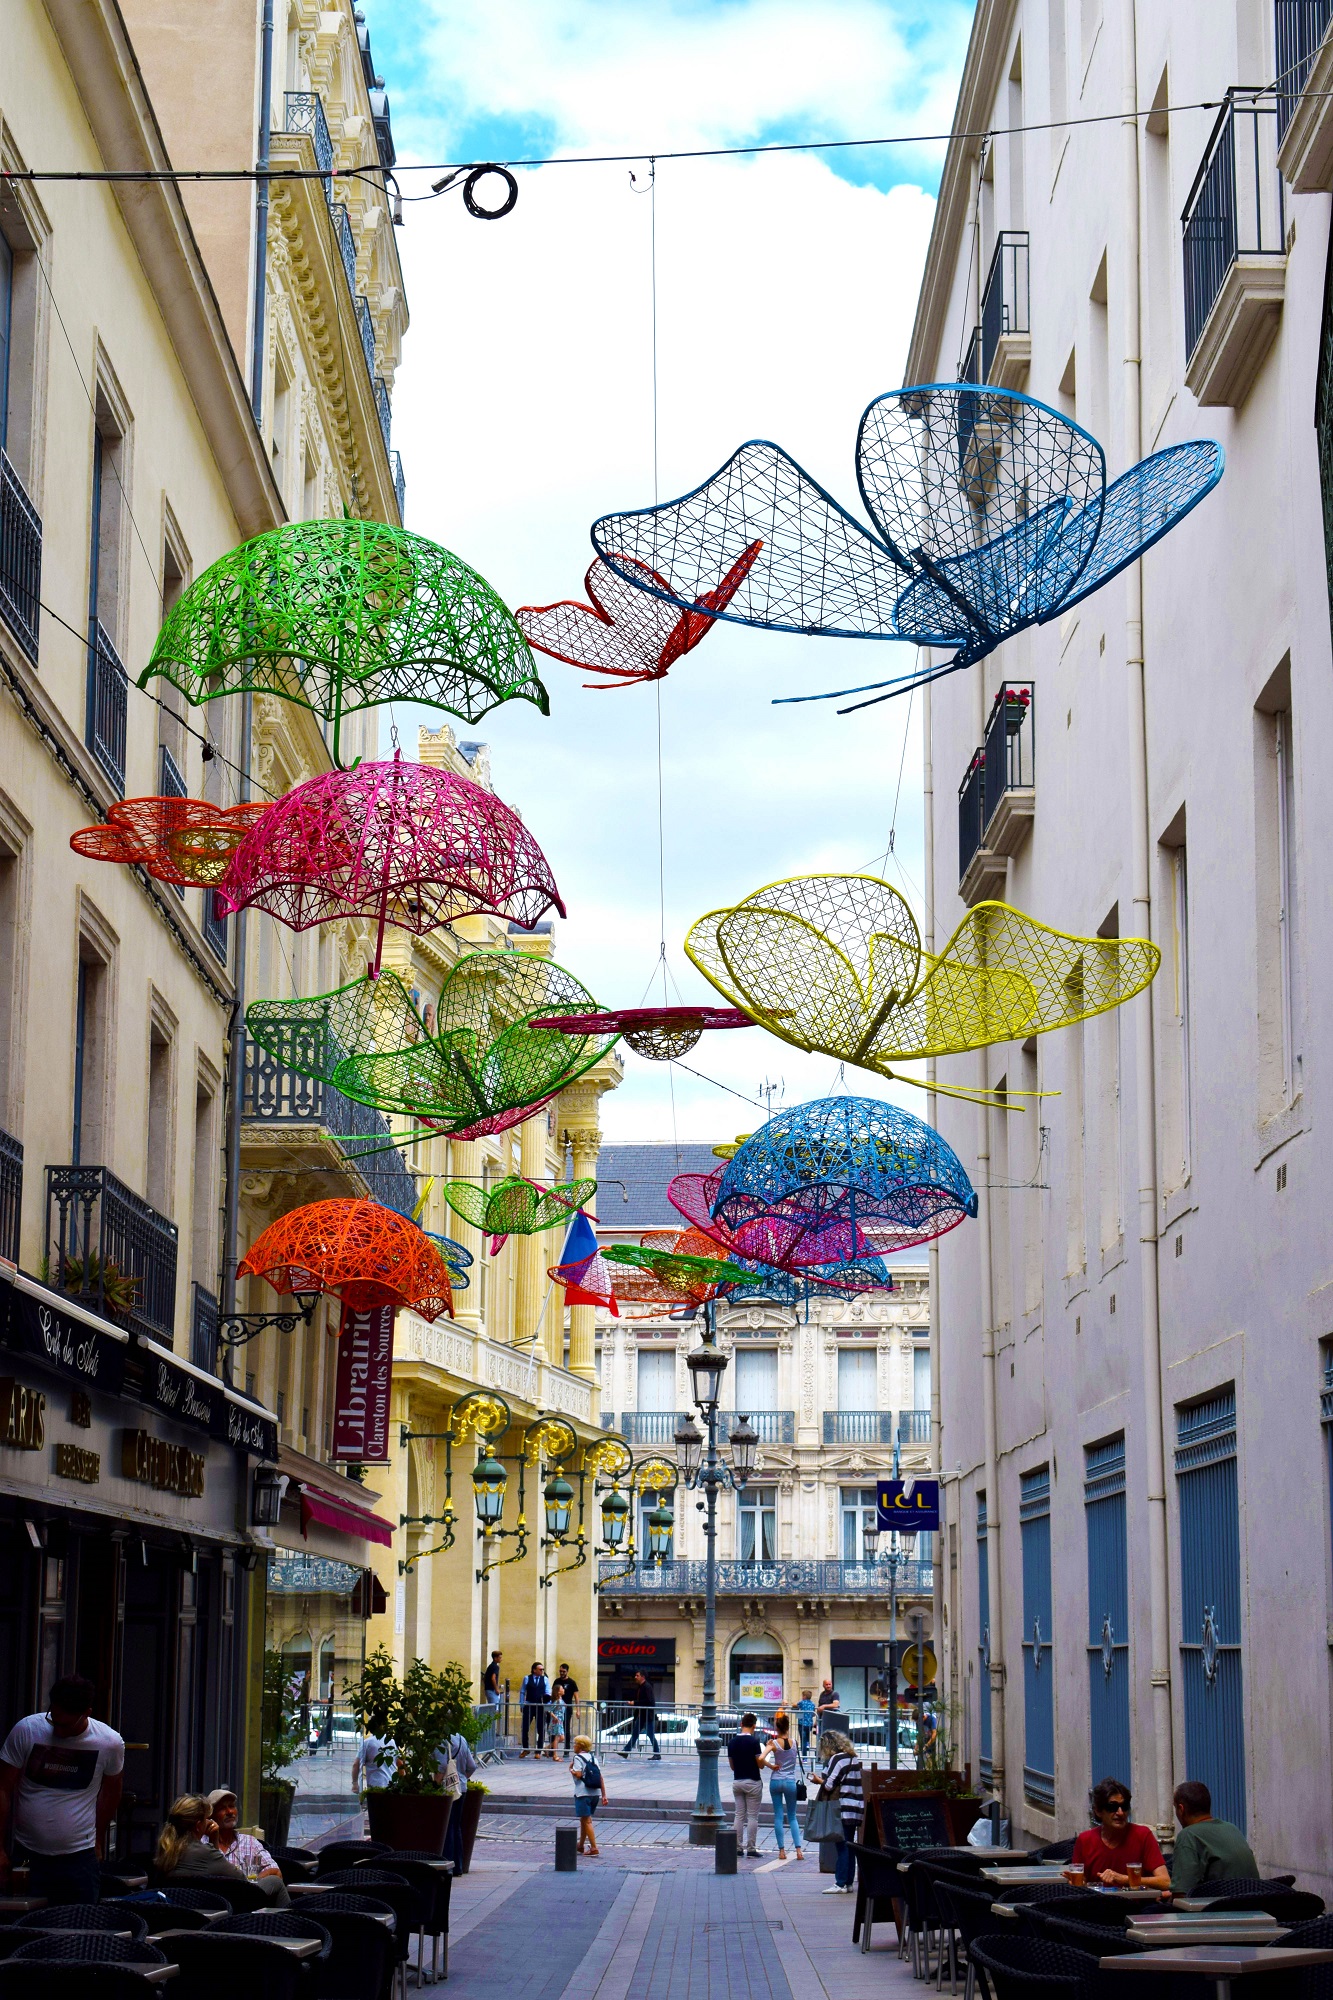 art-in-public-space-umbrellas-over-the-street